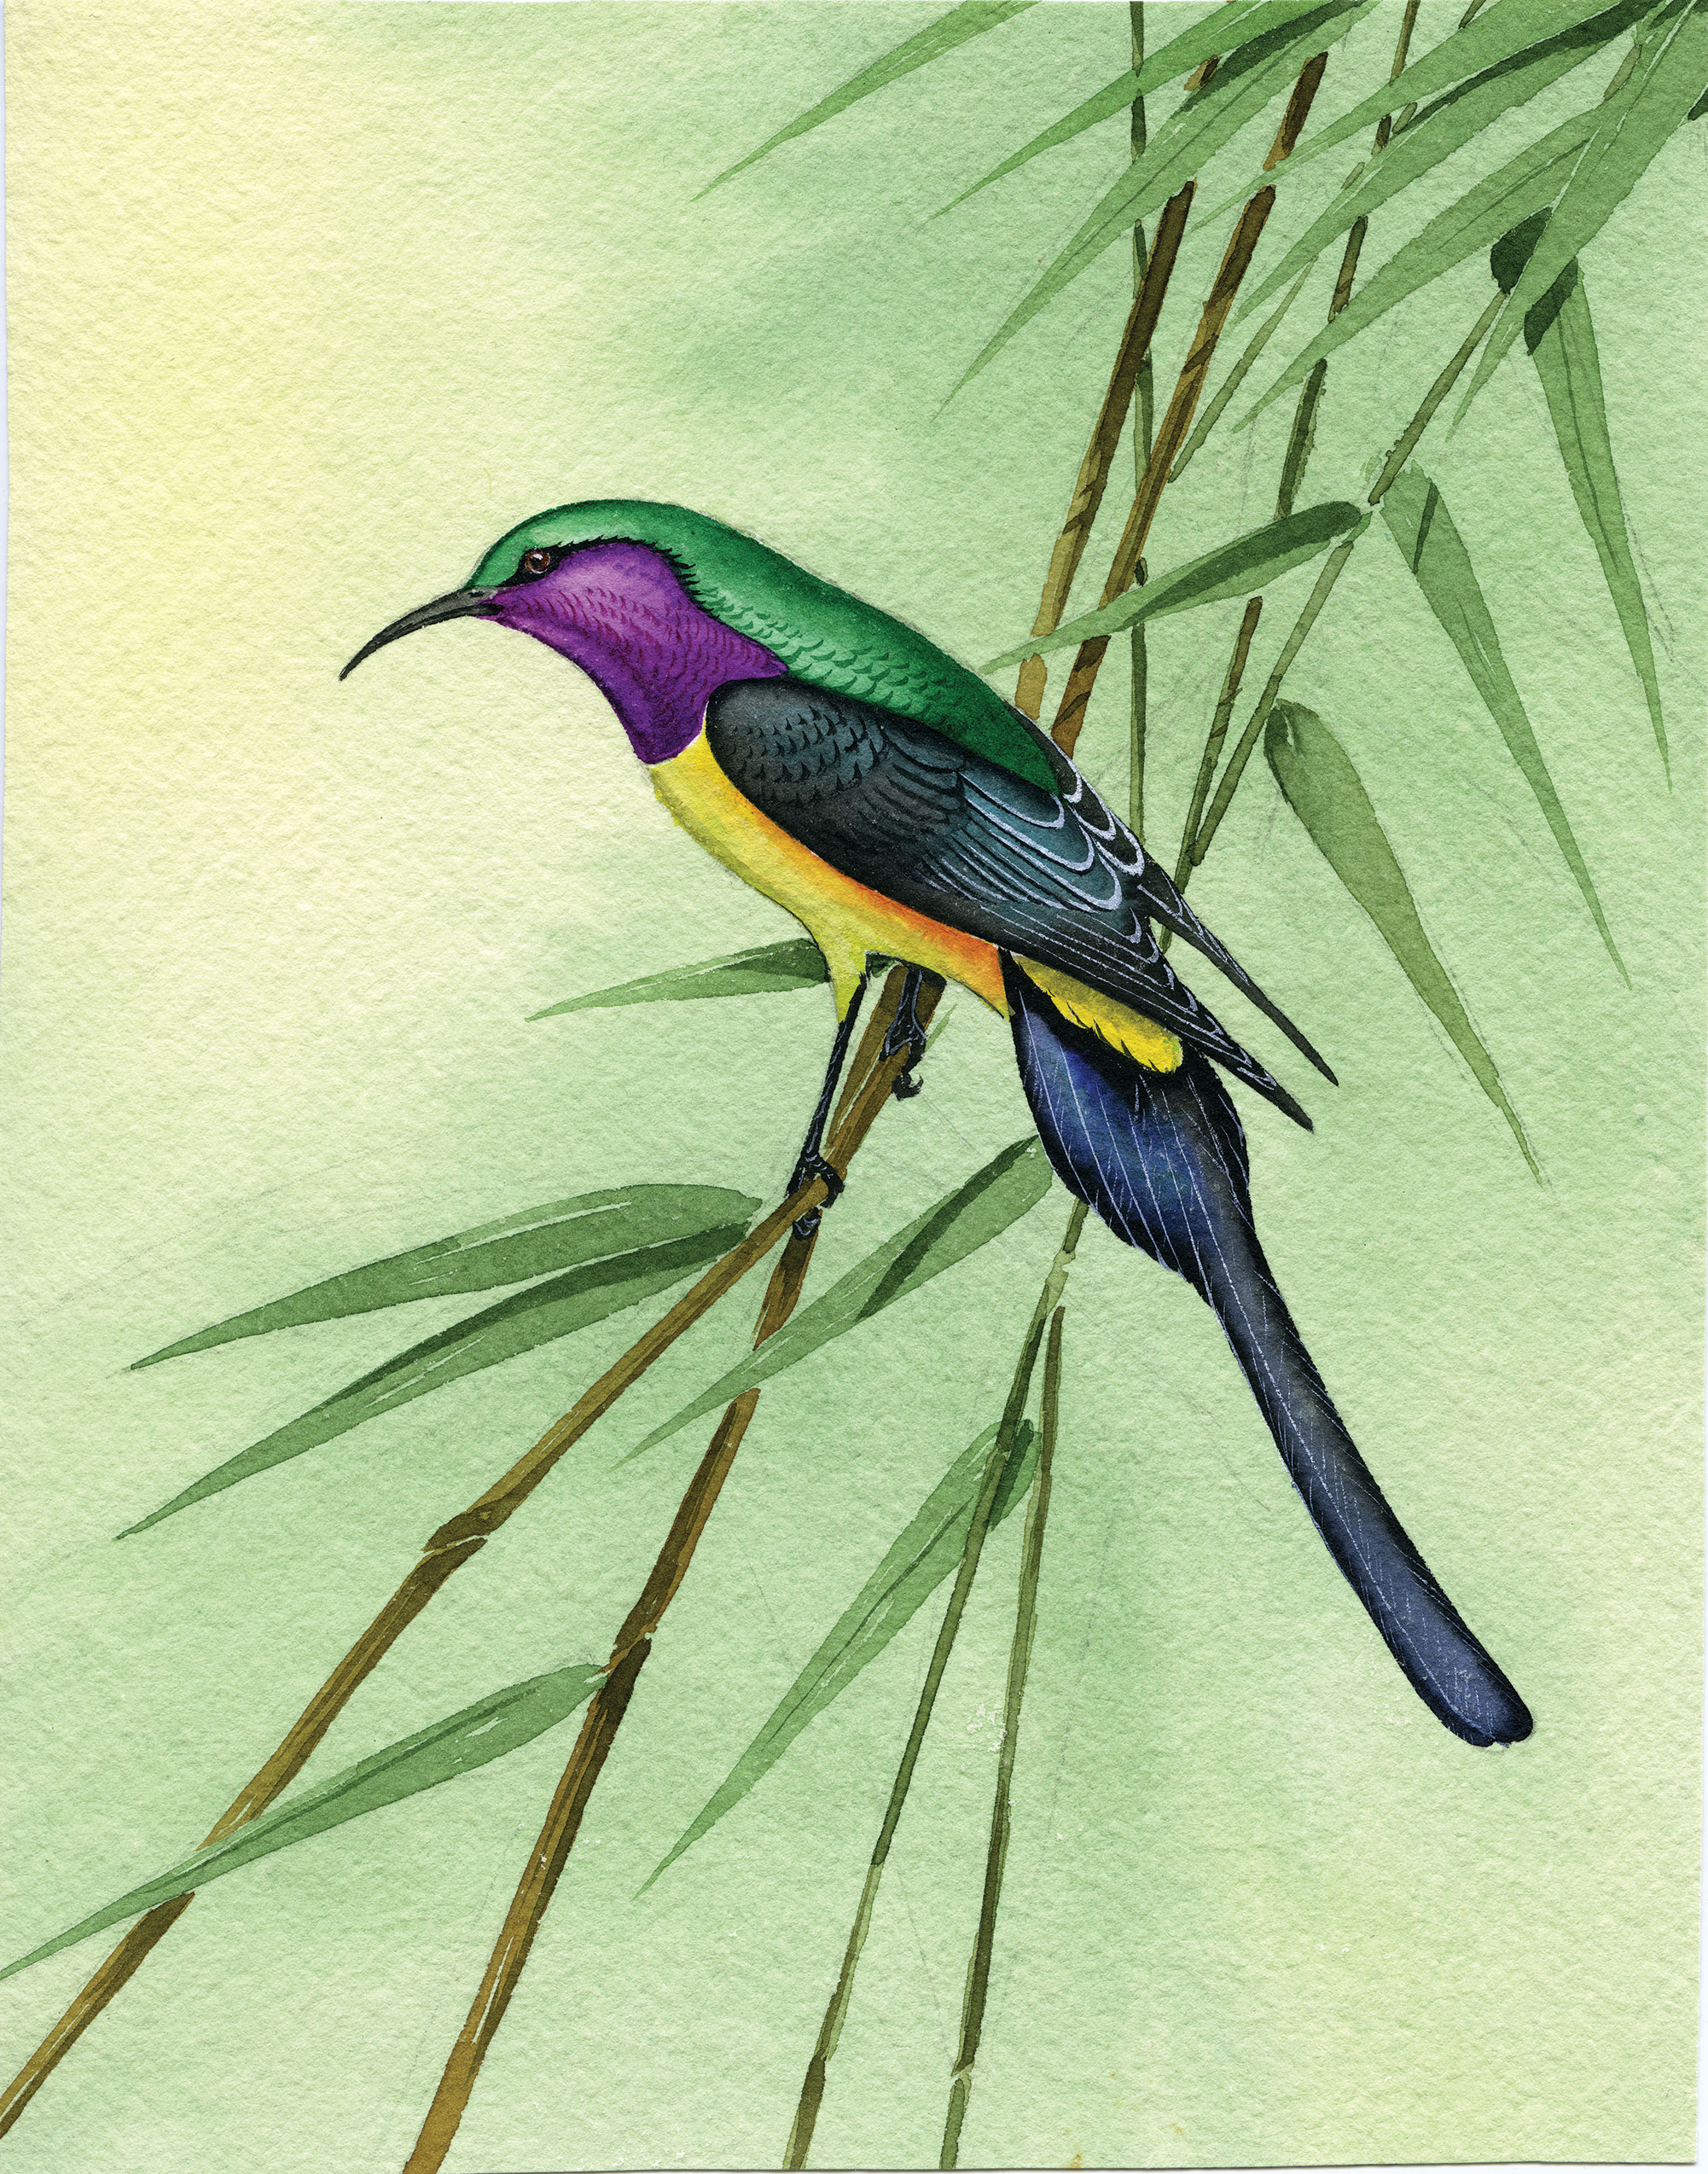 An illustration of a colourful bird.